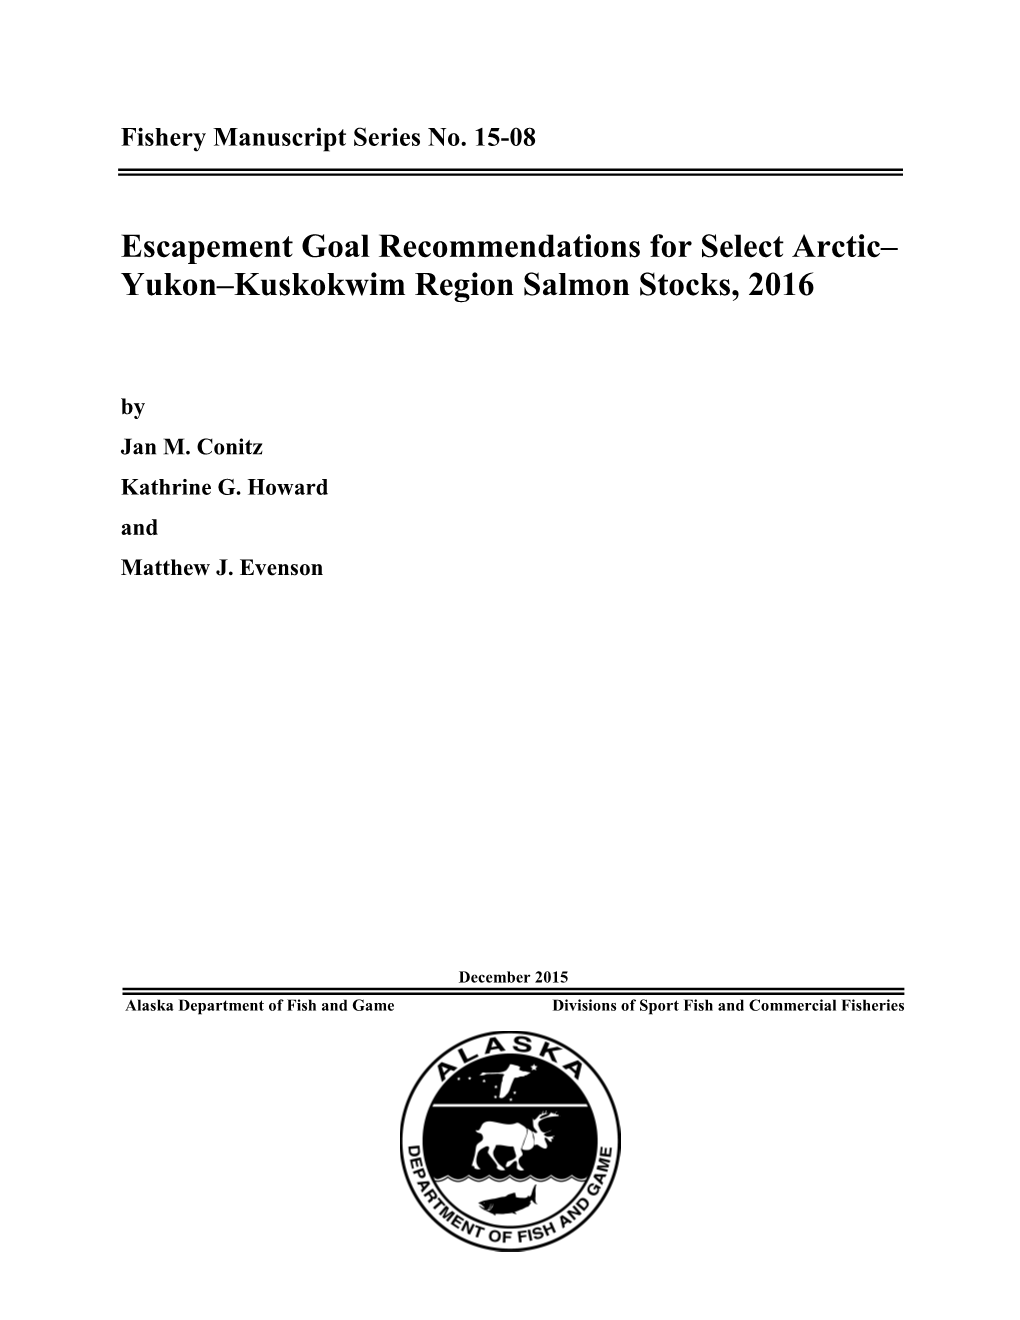 Escapement Goal Recommendations for Select Arctic-Yukon-Kuskokwim